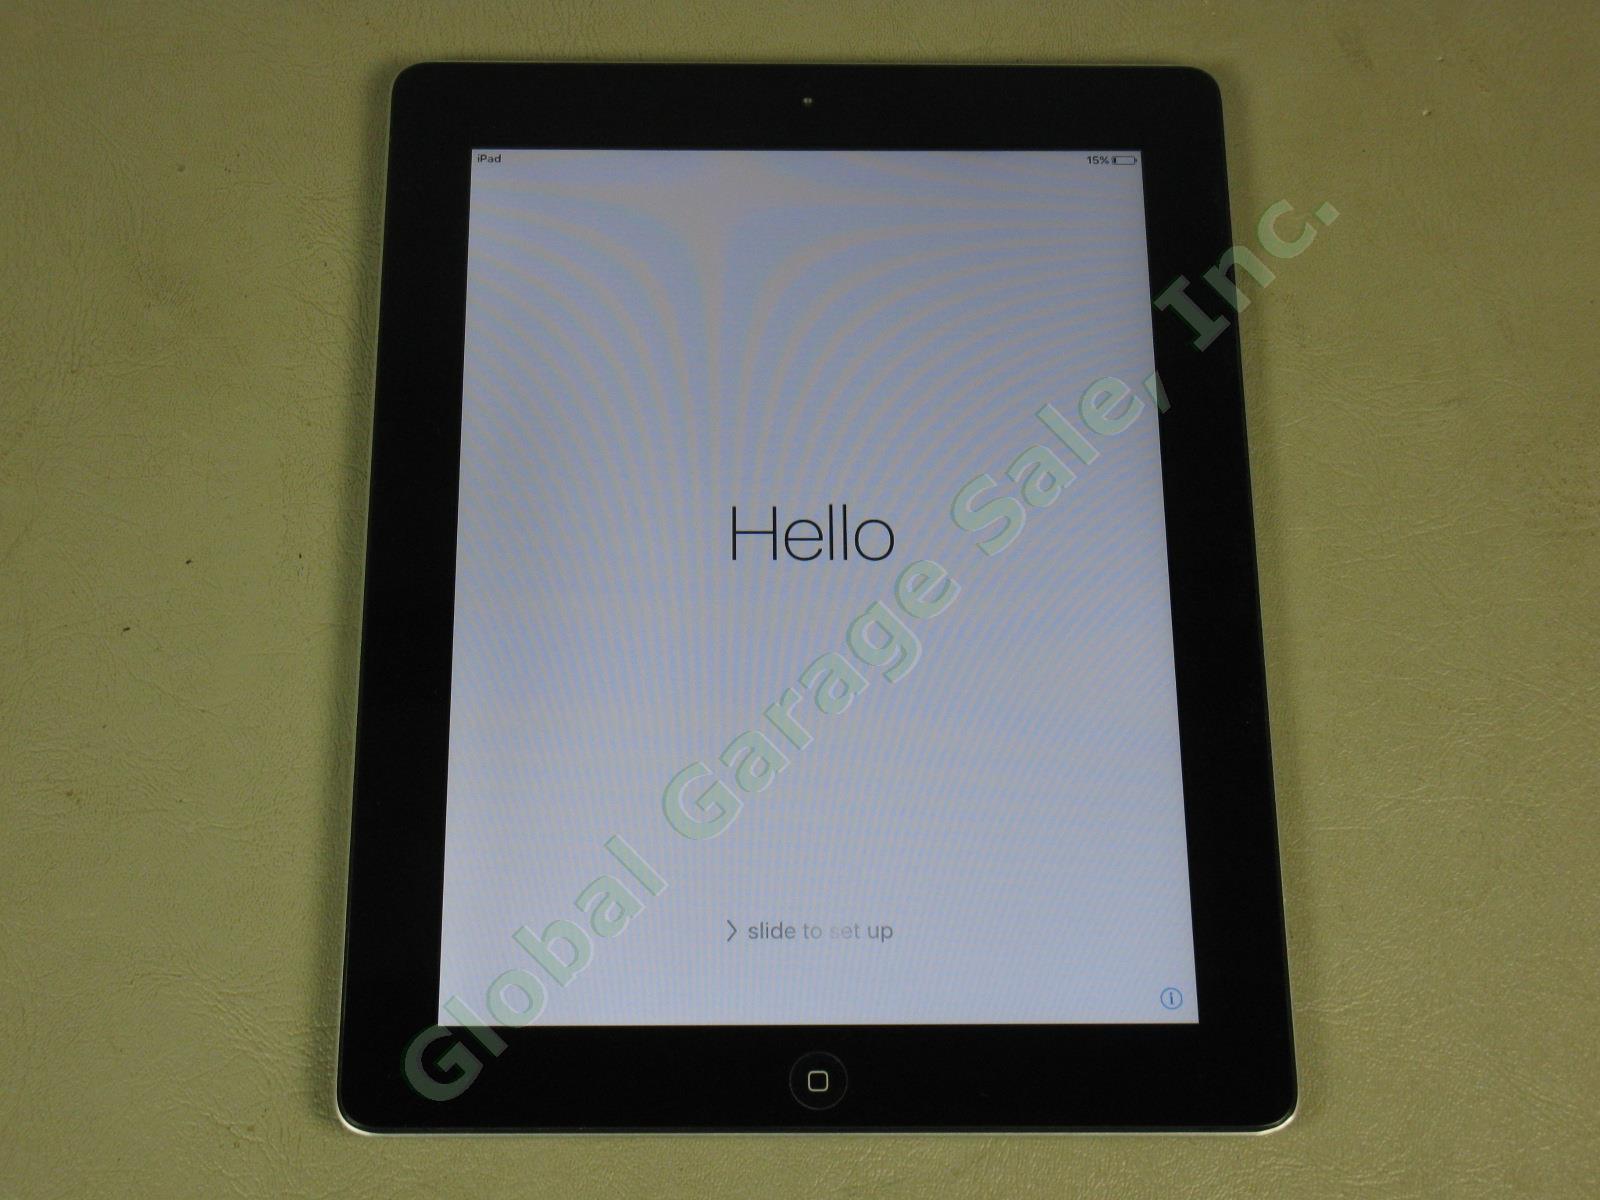 Apple iPad 2 Black Tablet 16GB Wifi Works Great Clean Screen MC770LL/A A1395 NR!